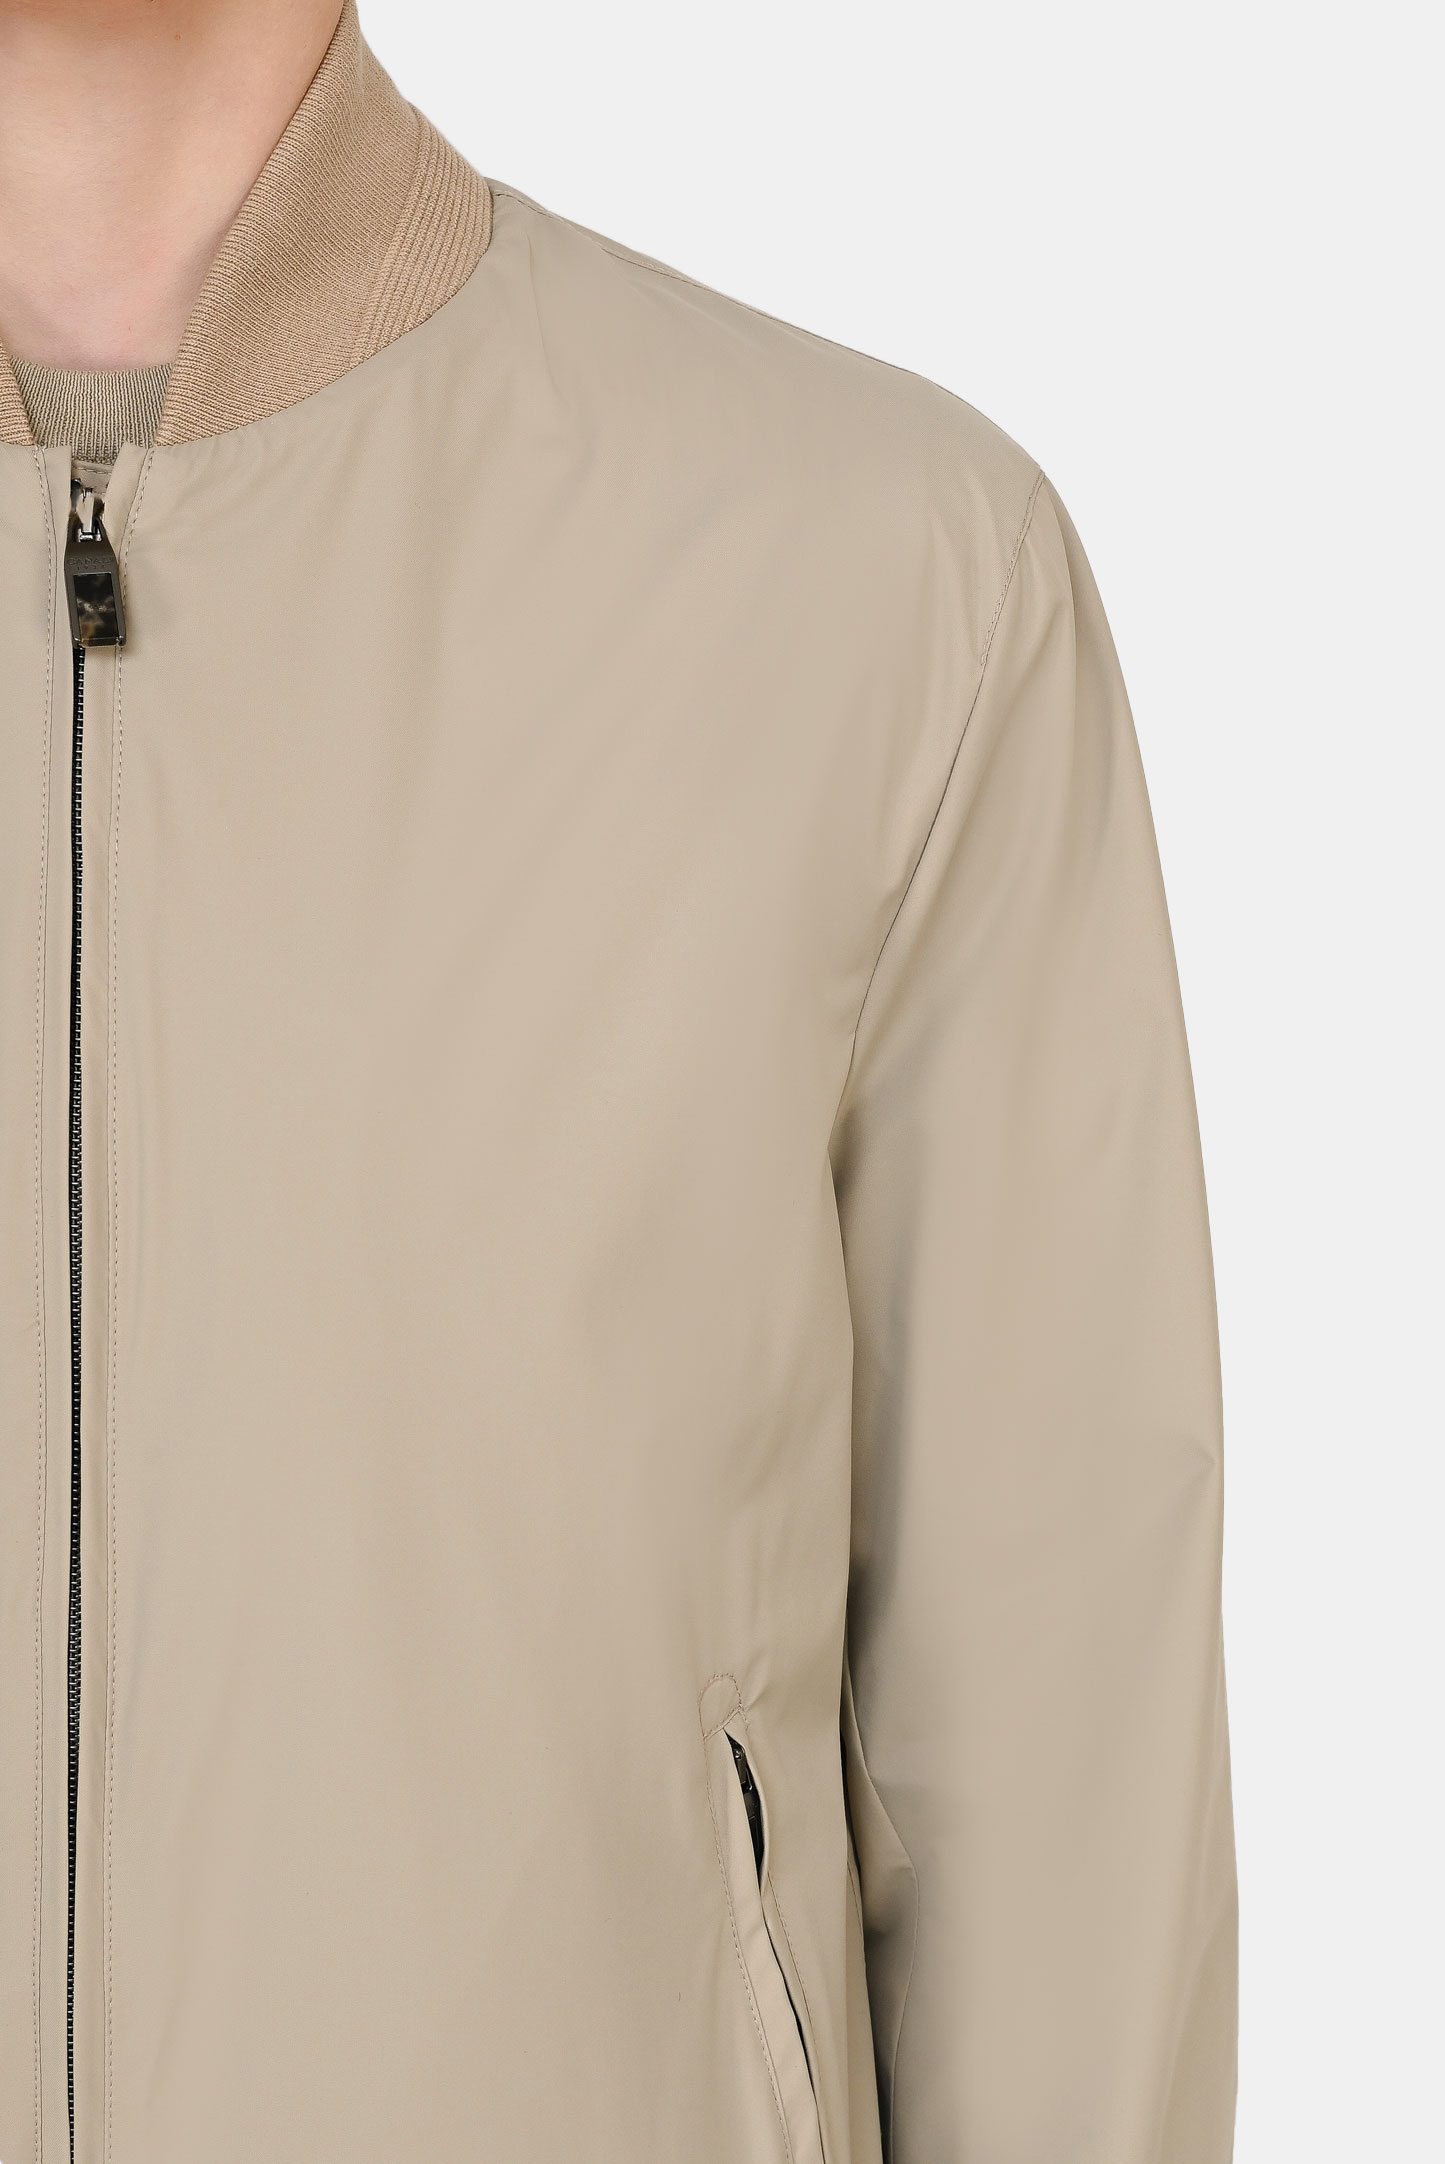 Куртка CANALI SX01937 O40706, цвет: Бежевый, Мужской